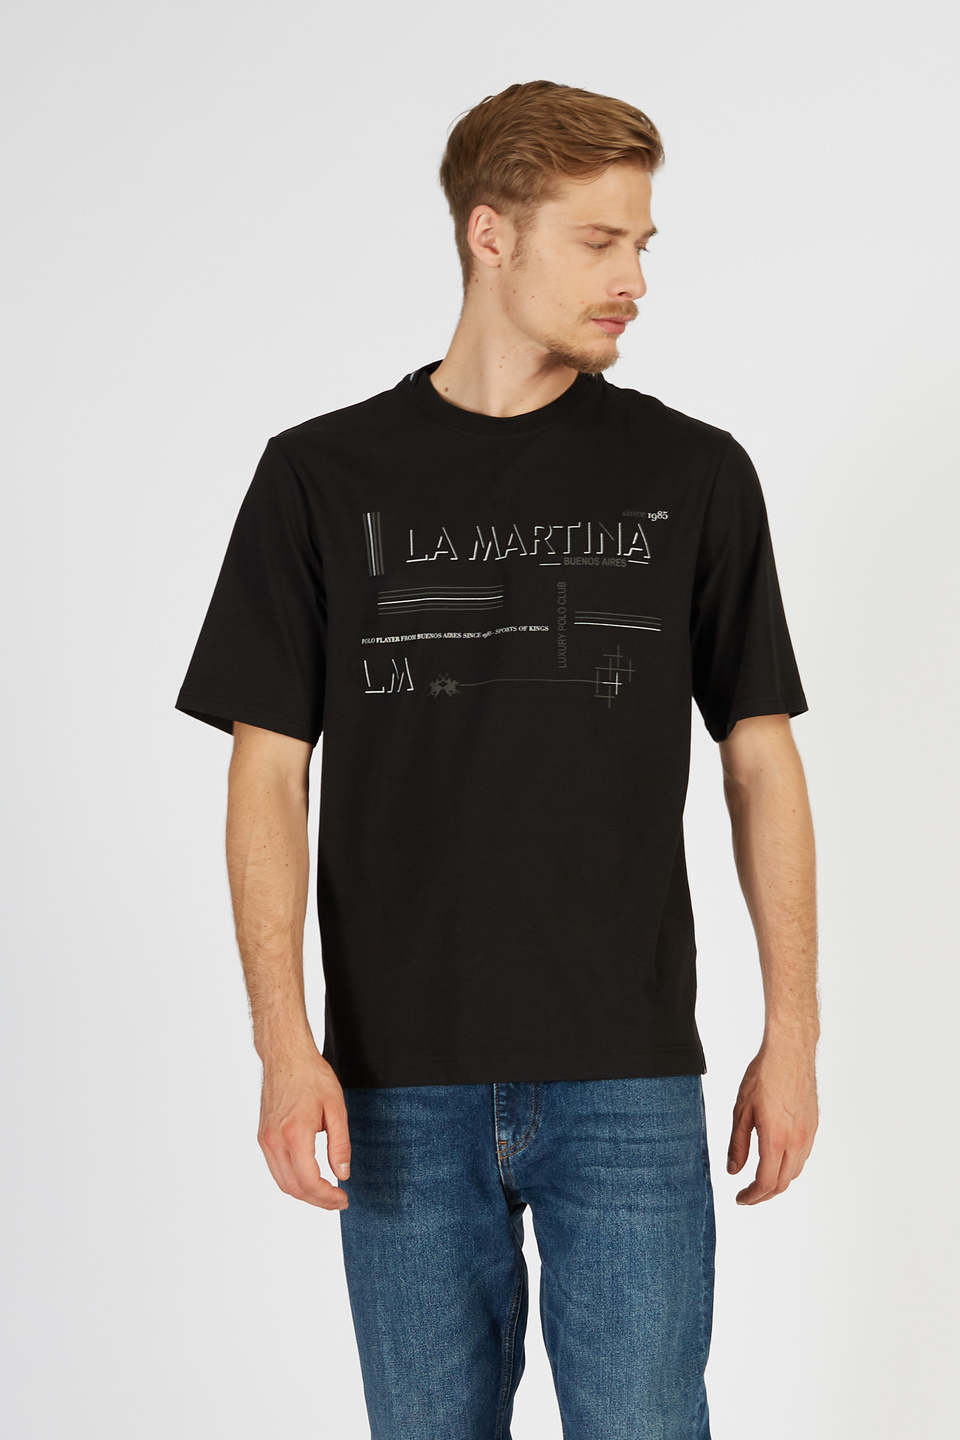 Men’s short-sleeved round neck stretch cotton t-shirt with regular fit | La Martina - Official Online Shop